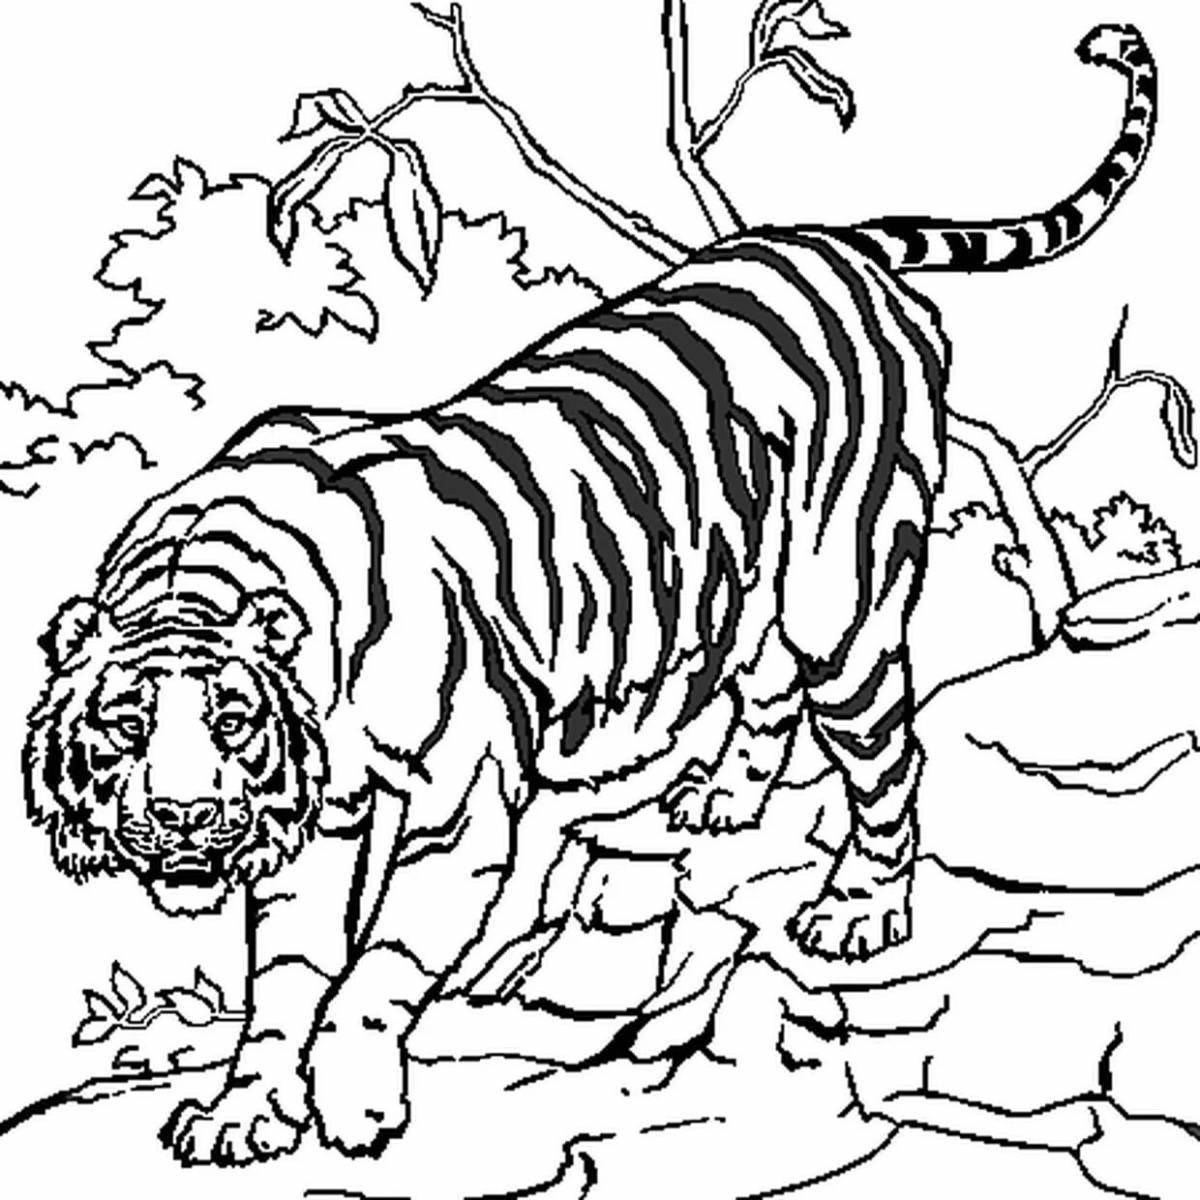 Impressive tiger sherkhan coloring page